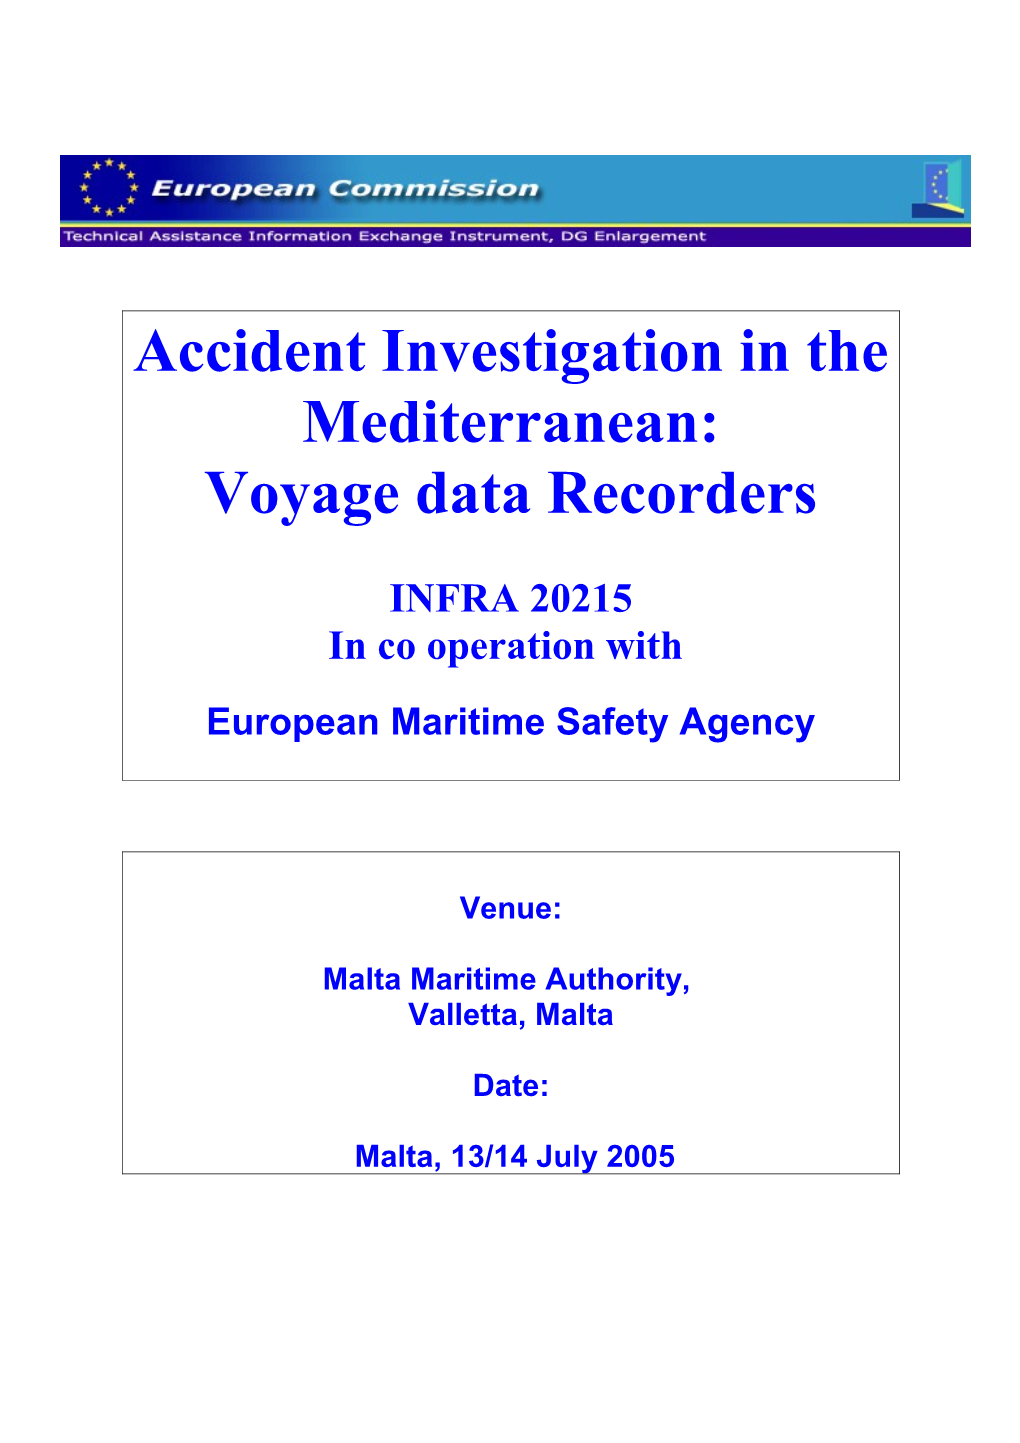 Accident Investigation in the Mediterranean